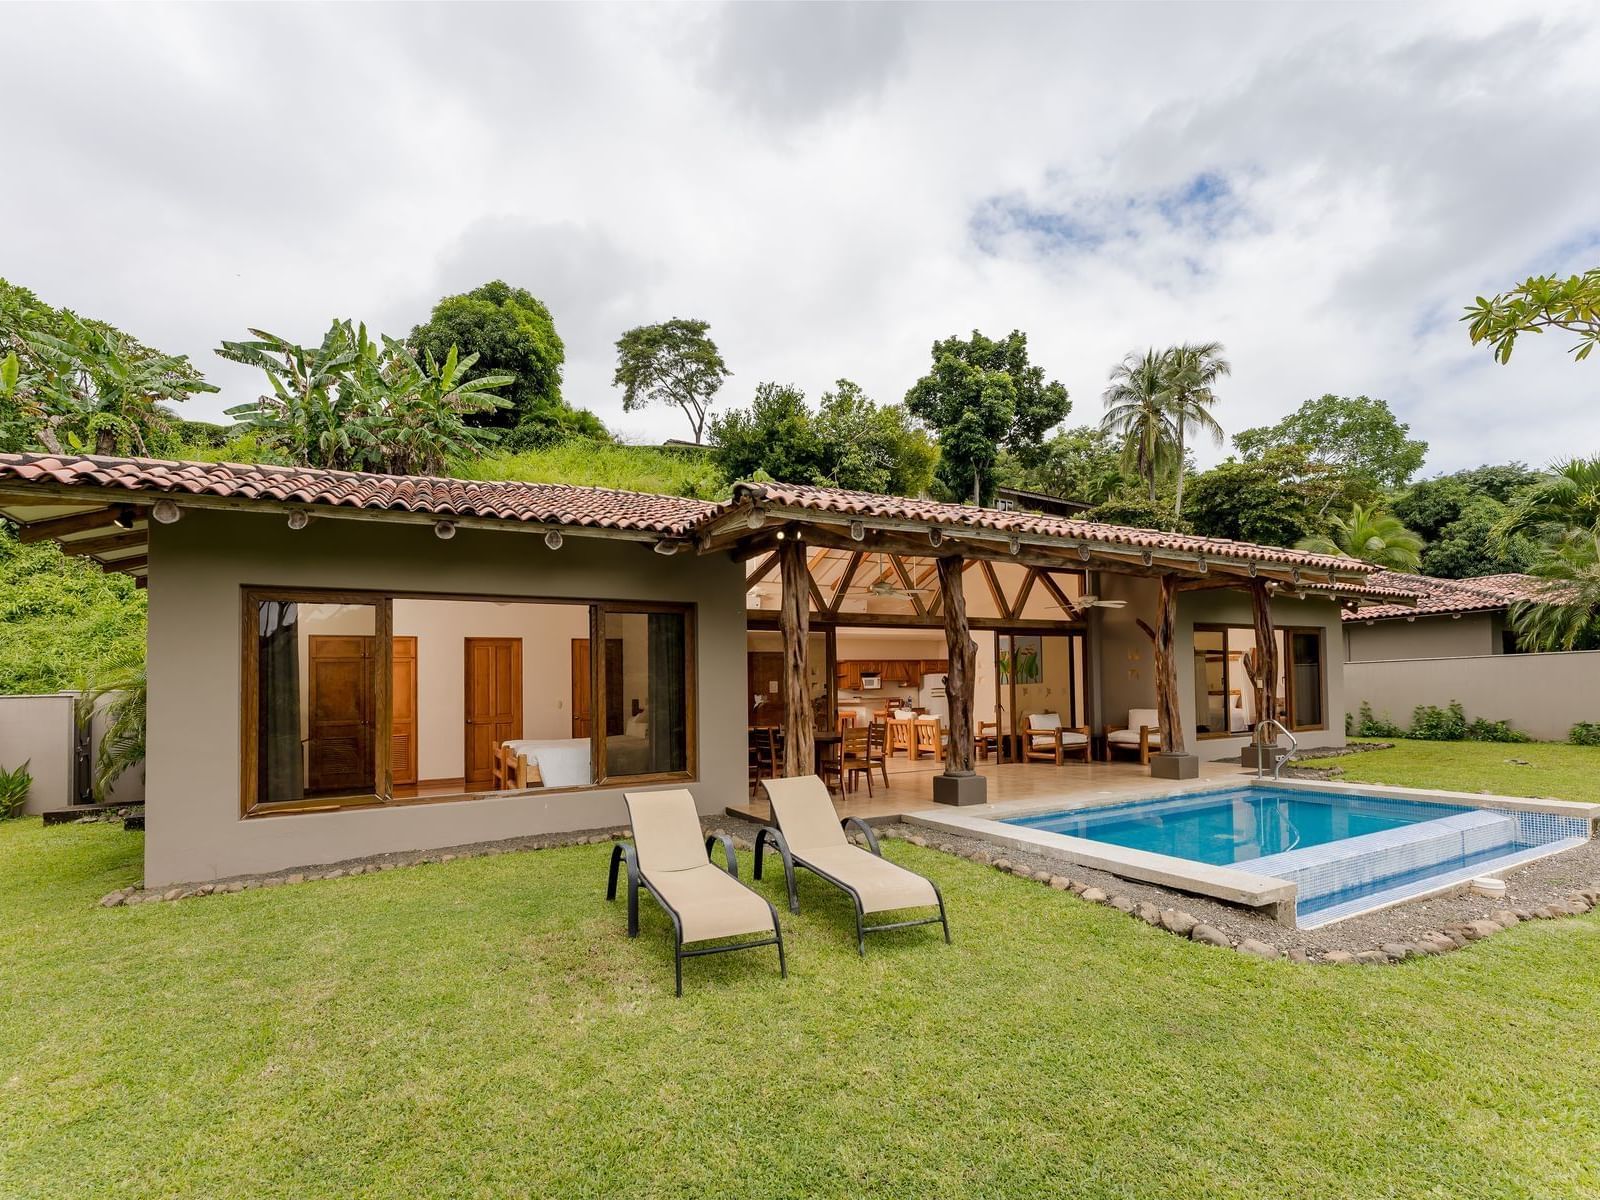 Exterior view of Higueron & outdoor pool at Punta Islita Hotel